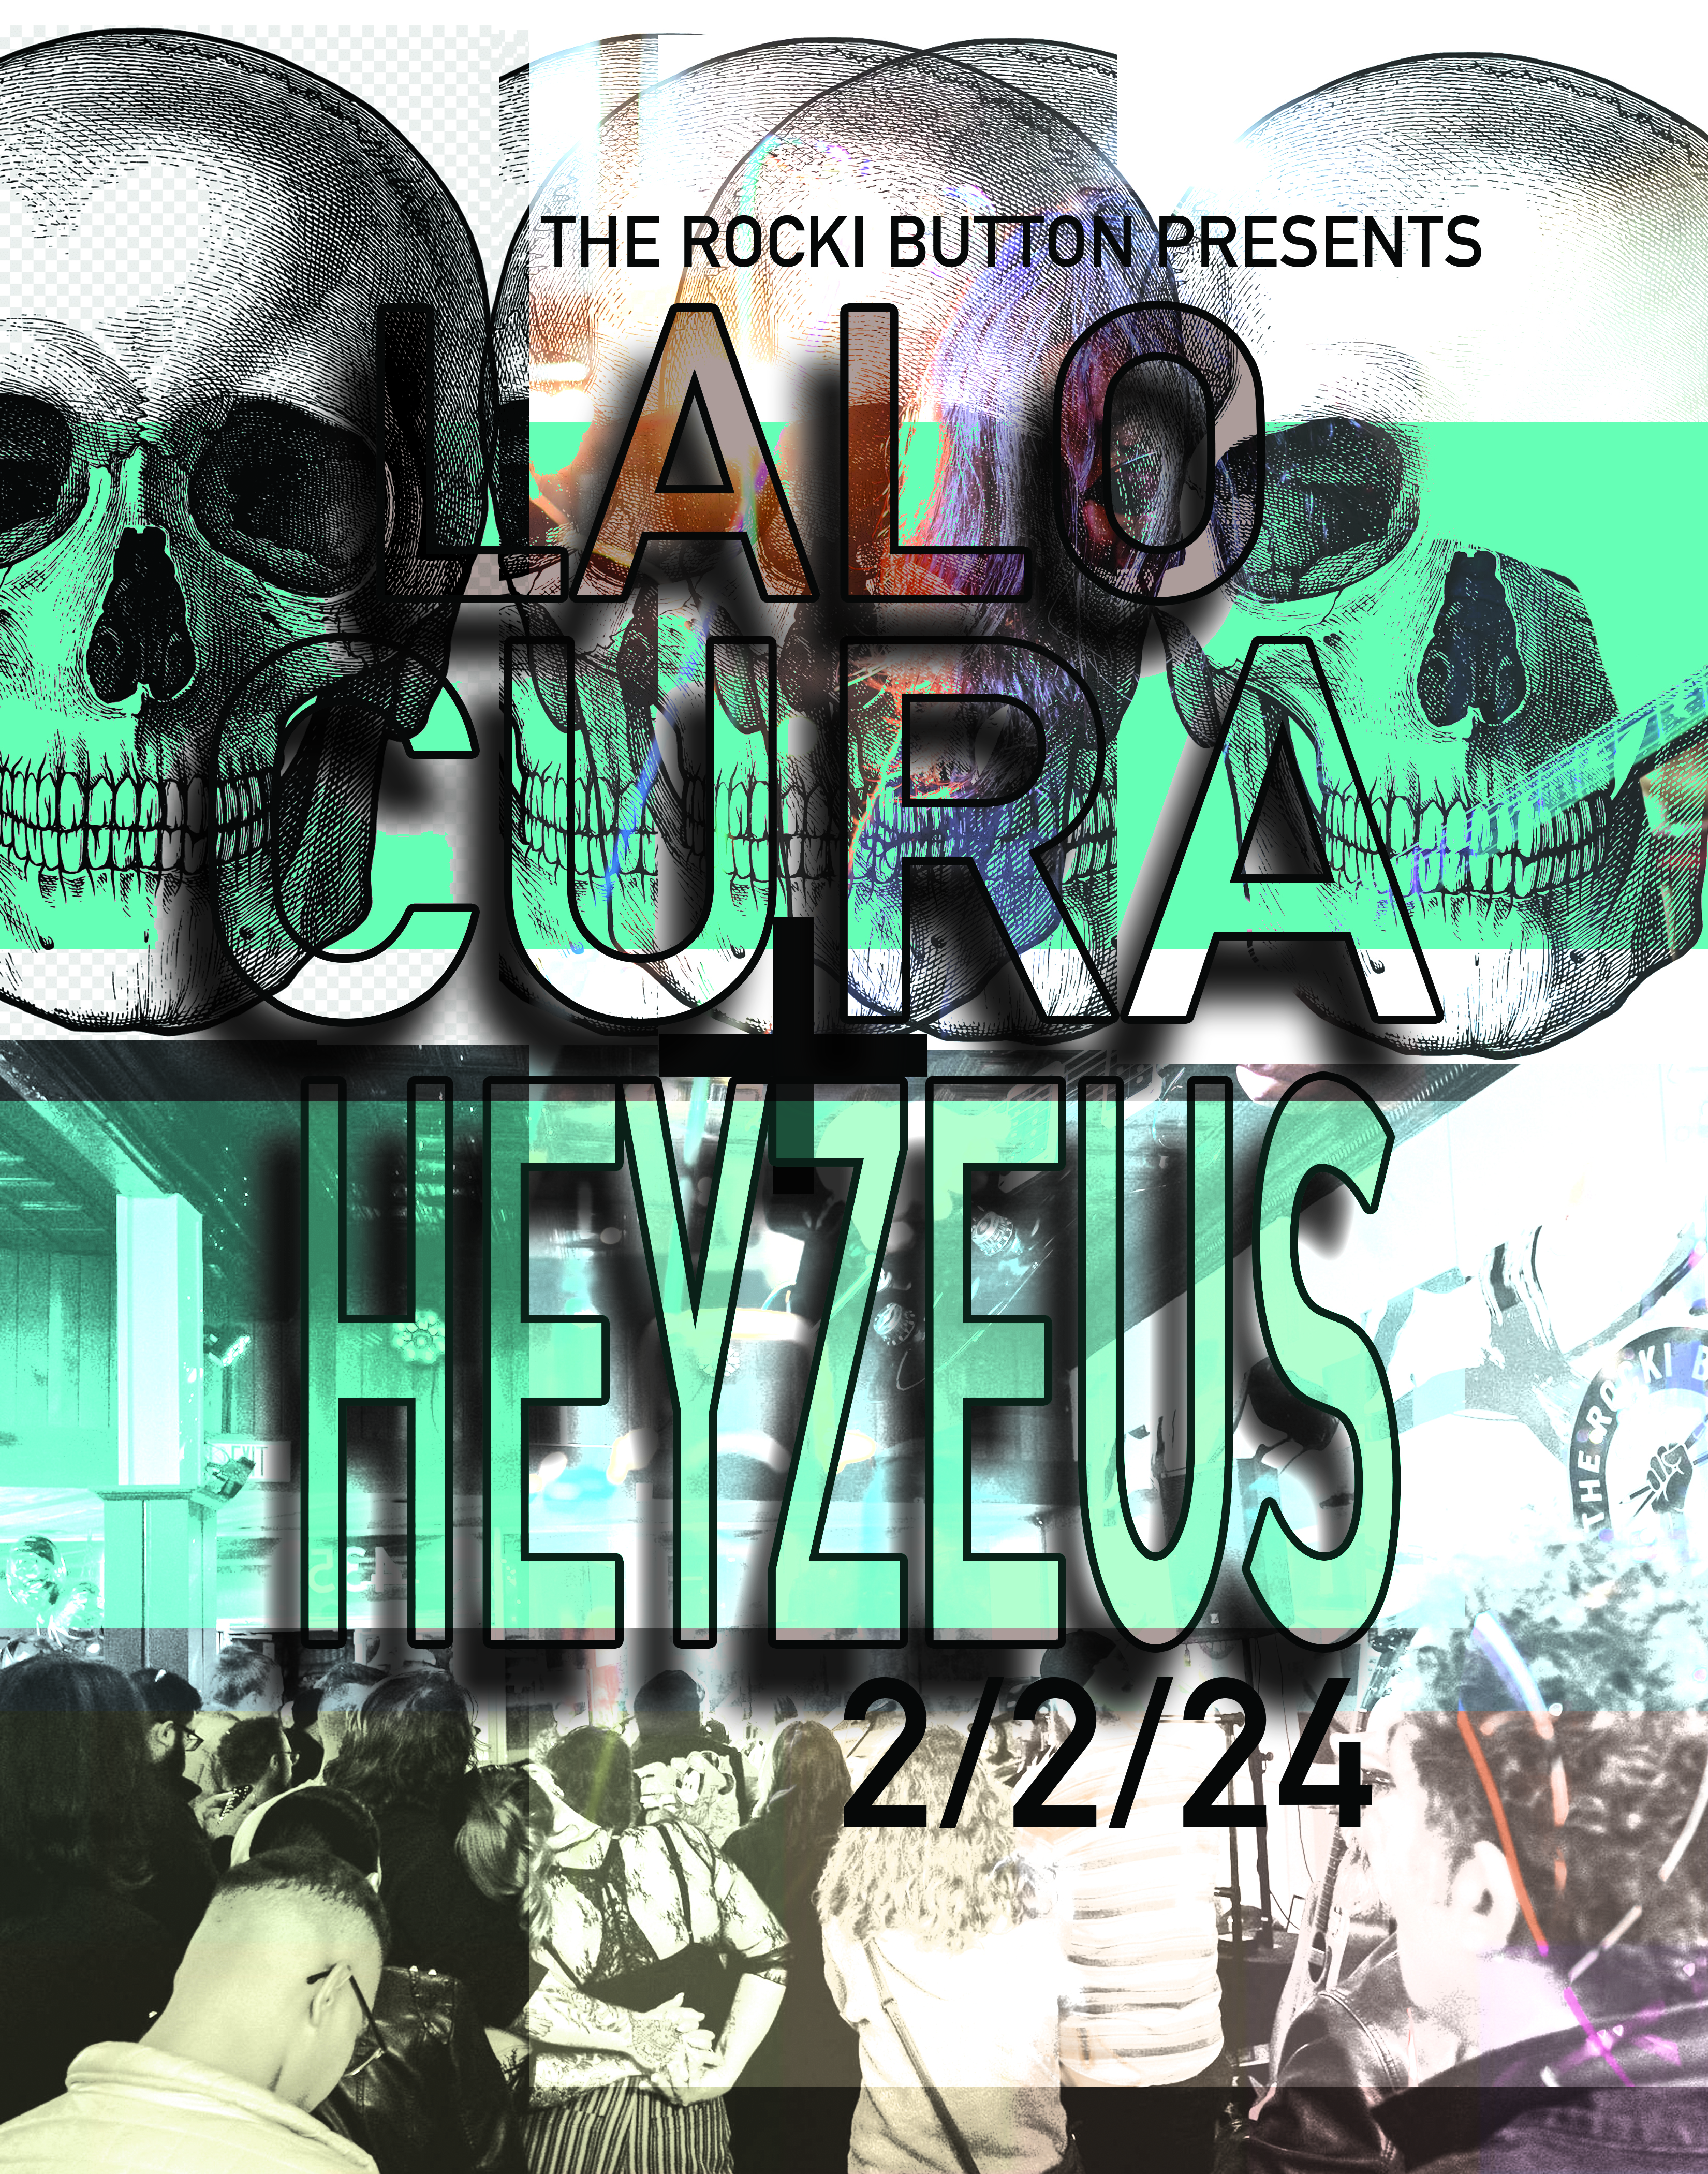 Lalo Cura & Heyzeus Live